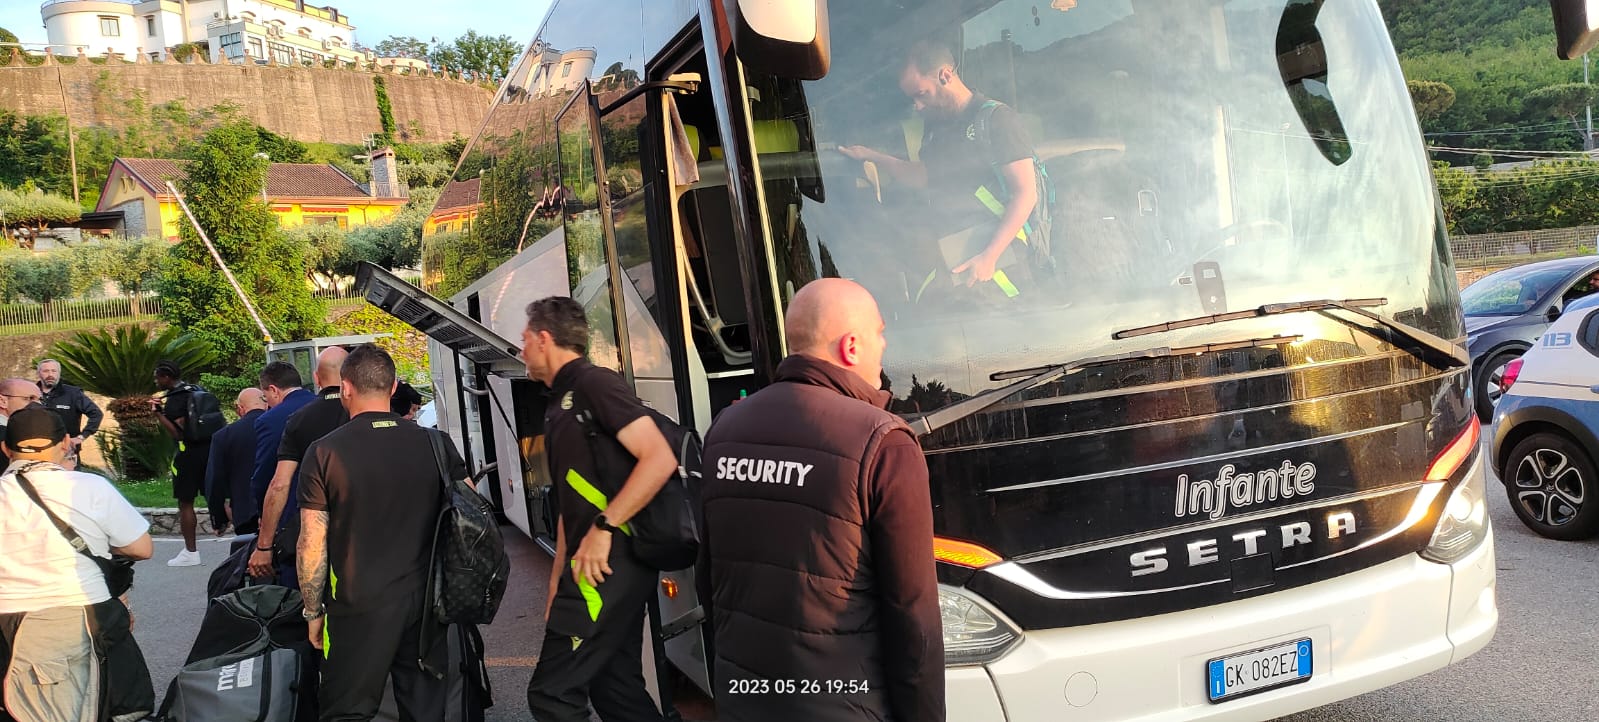 Serie A, Udinese in trasferta a Salerno con bus Infante